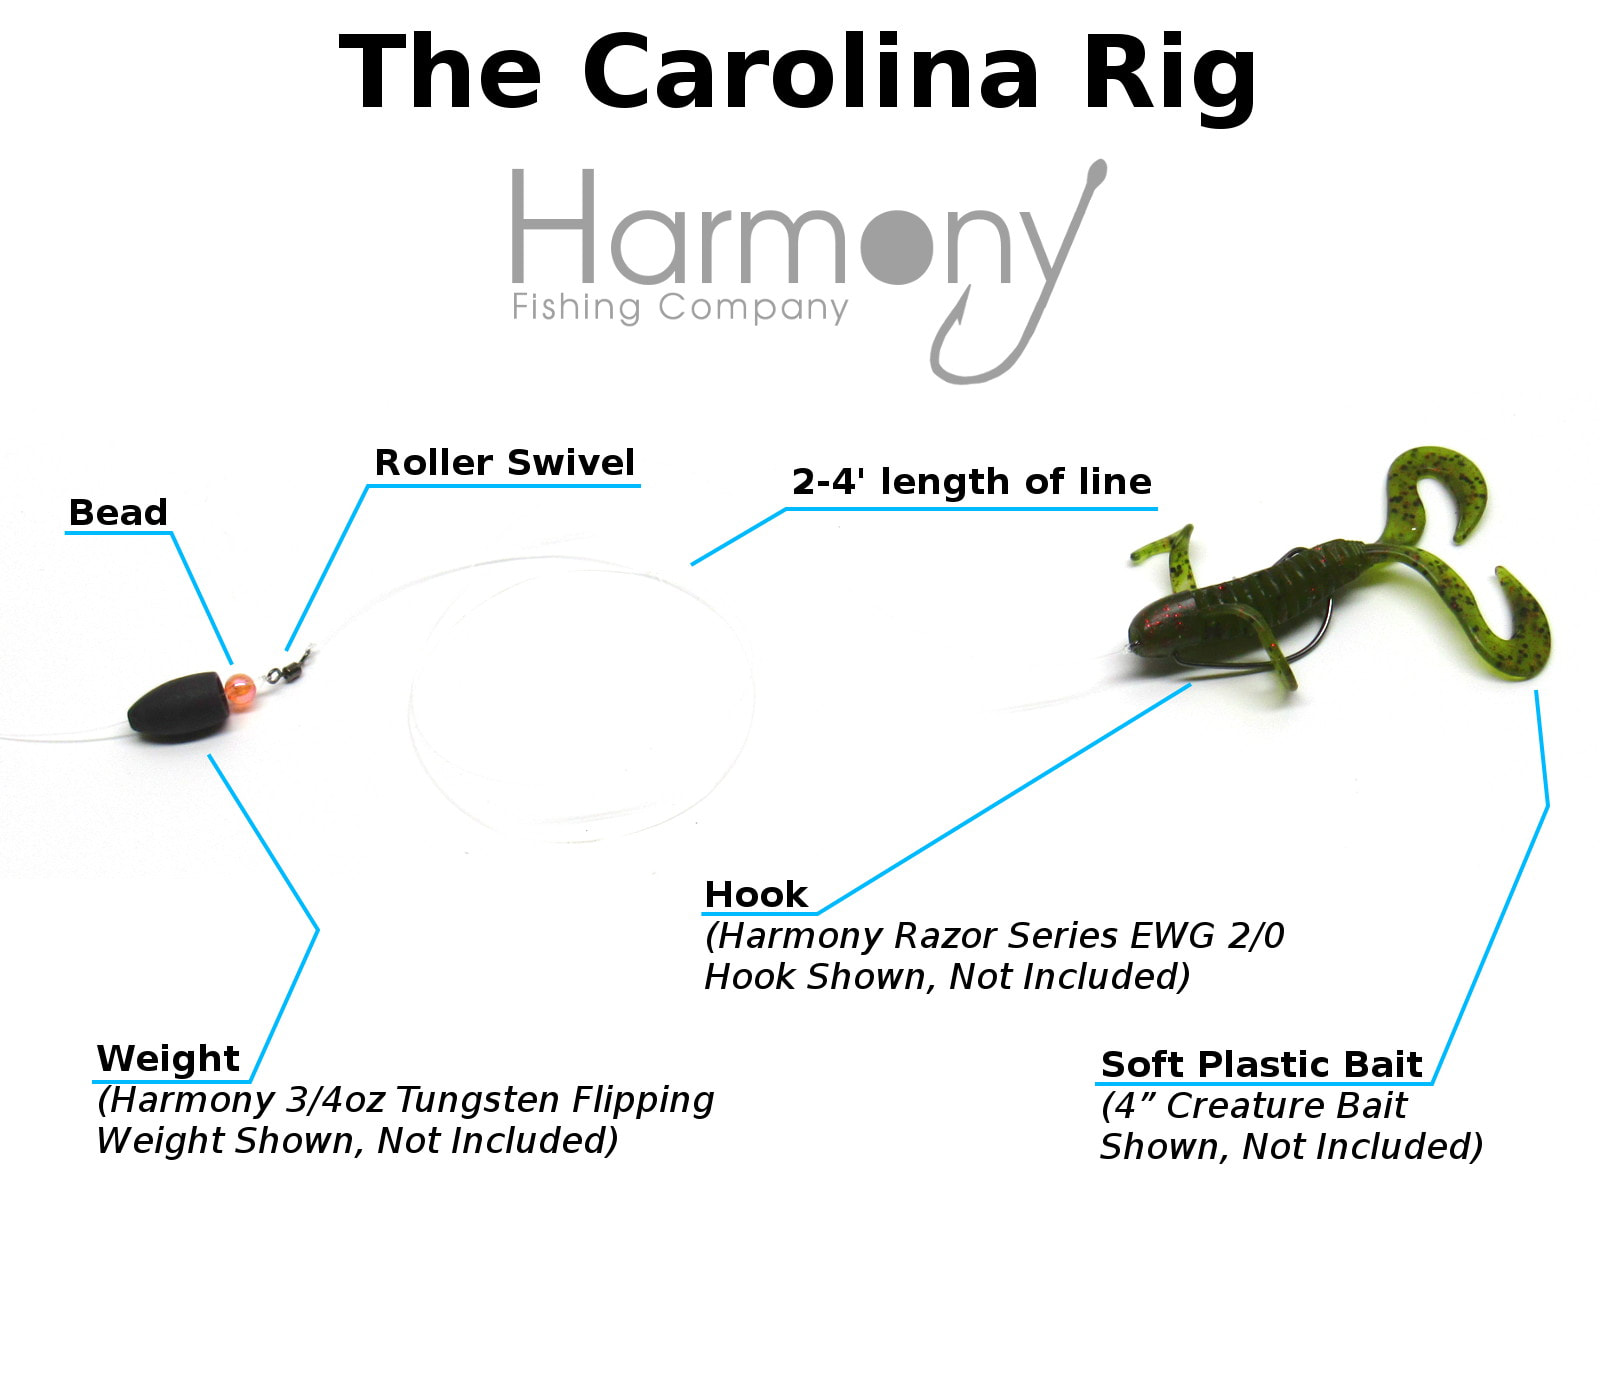 Carolina Swivel Kit (12 Pack) - 12 Swivels & 12 Beads for Carolina Rigging